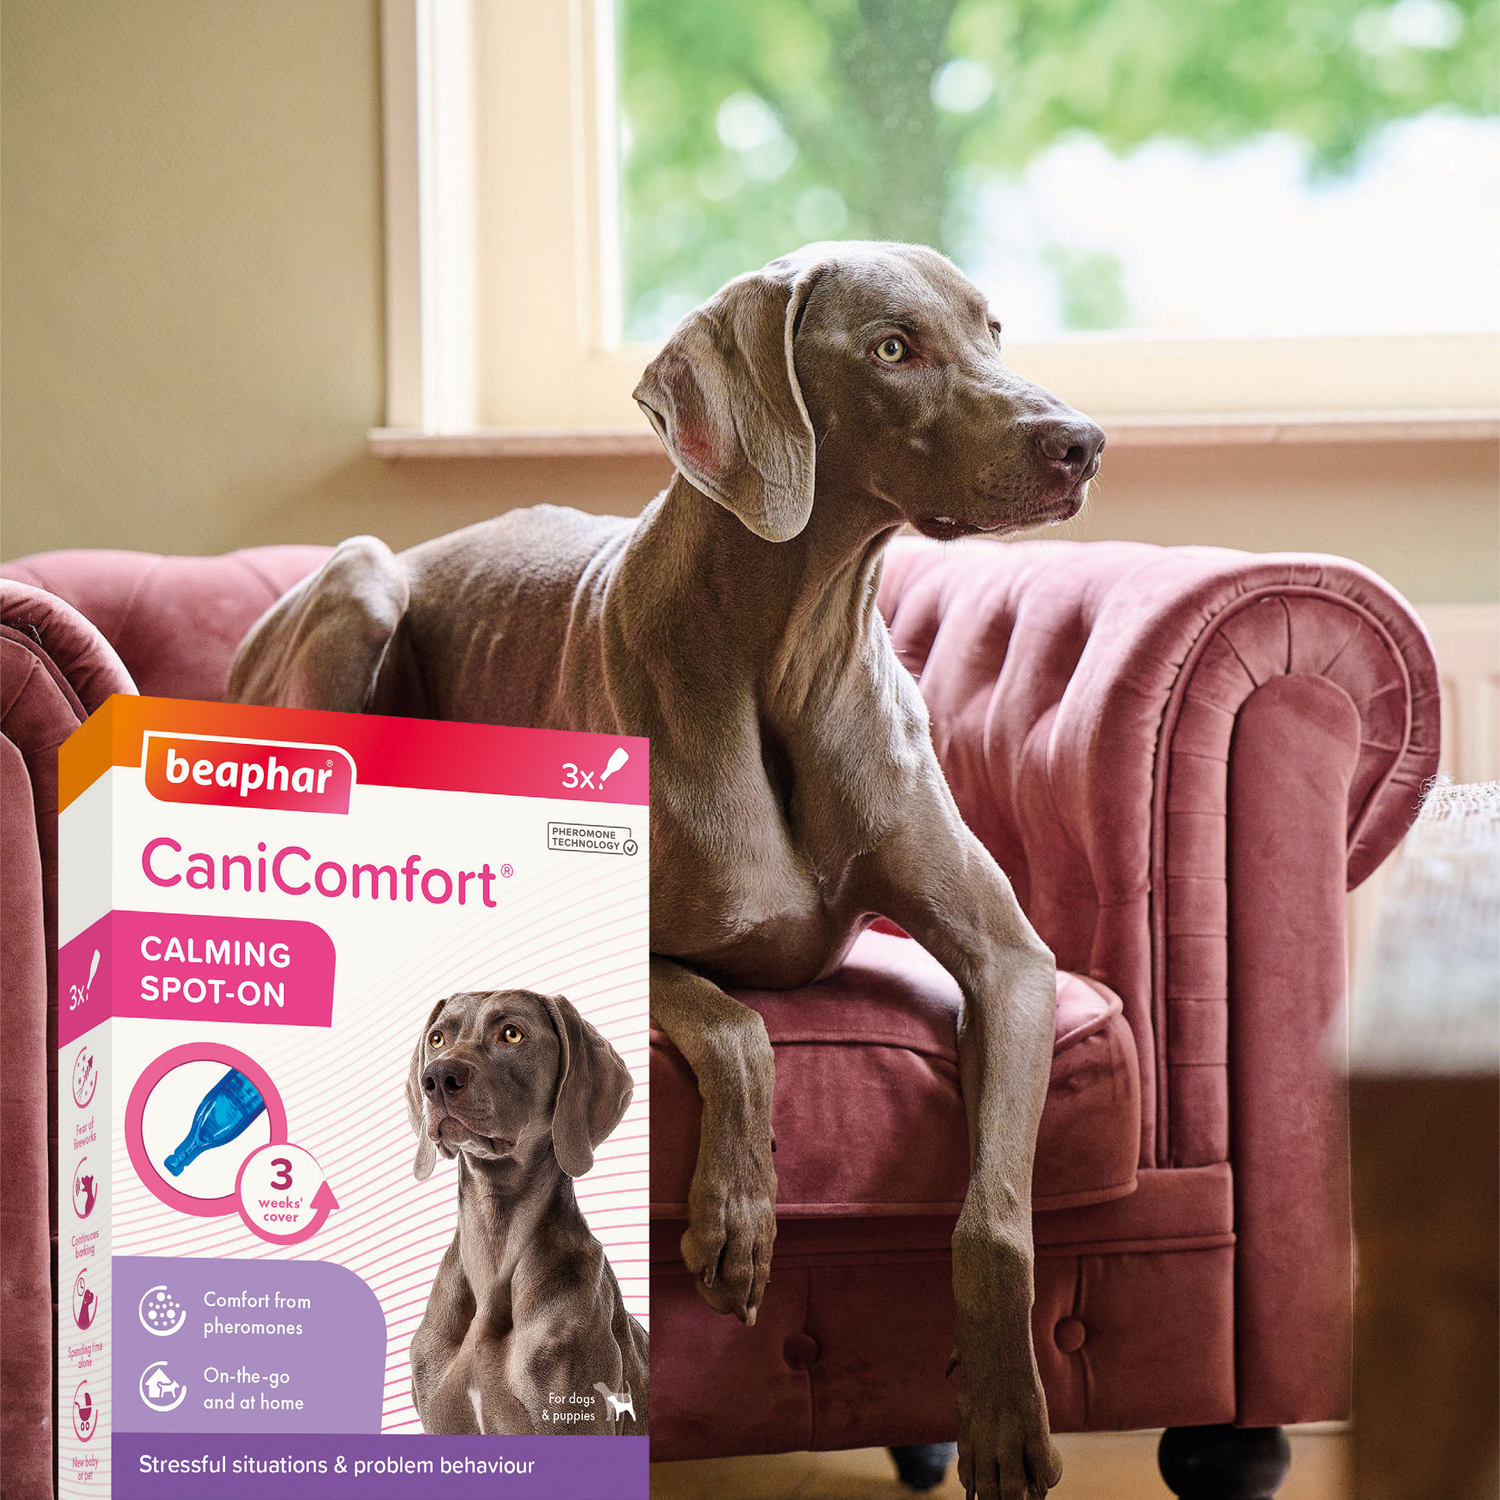 Beaphar CaniComfort pheromones Spot-On pentru câini - zoom